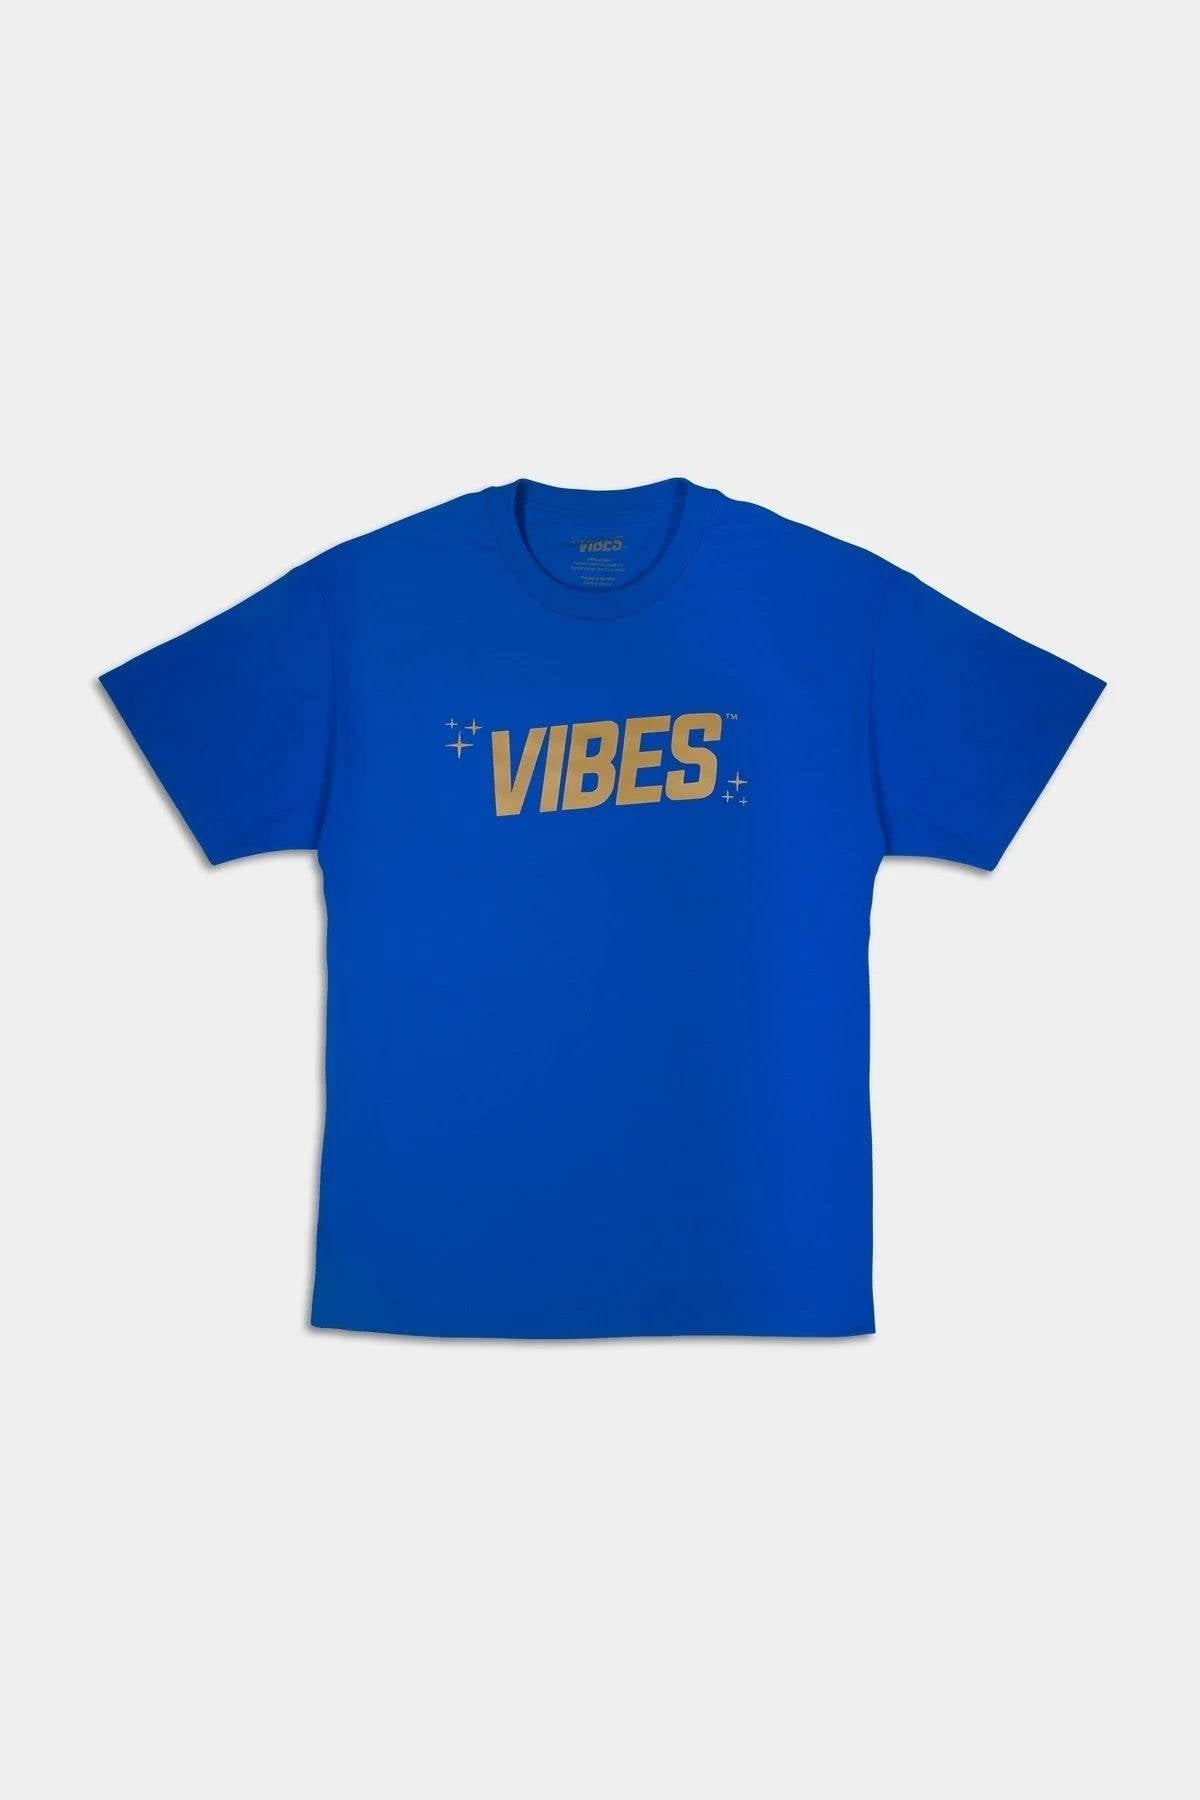 VIBES Blue With Gold Logo T-Shirt Medium